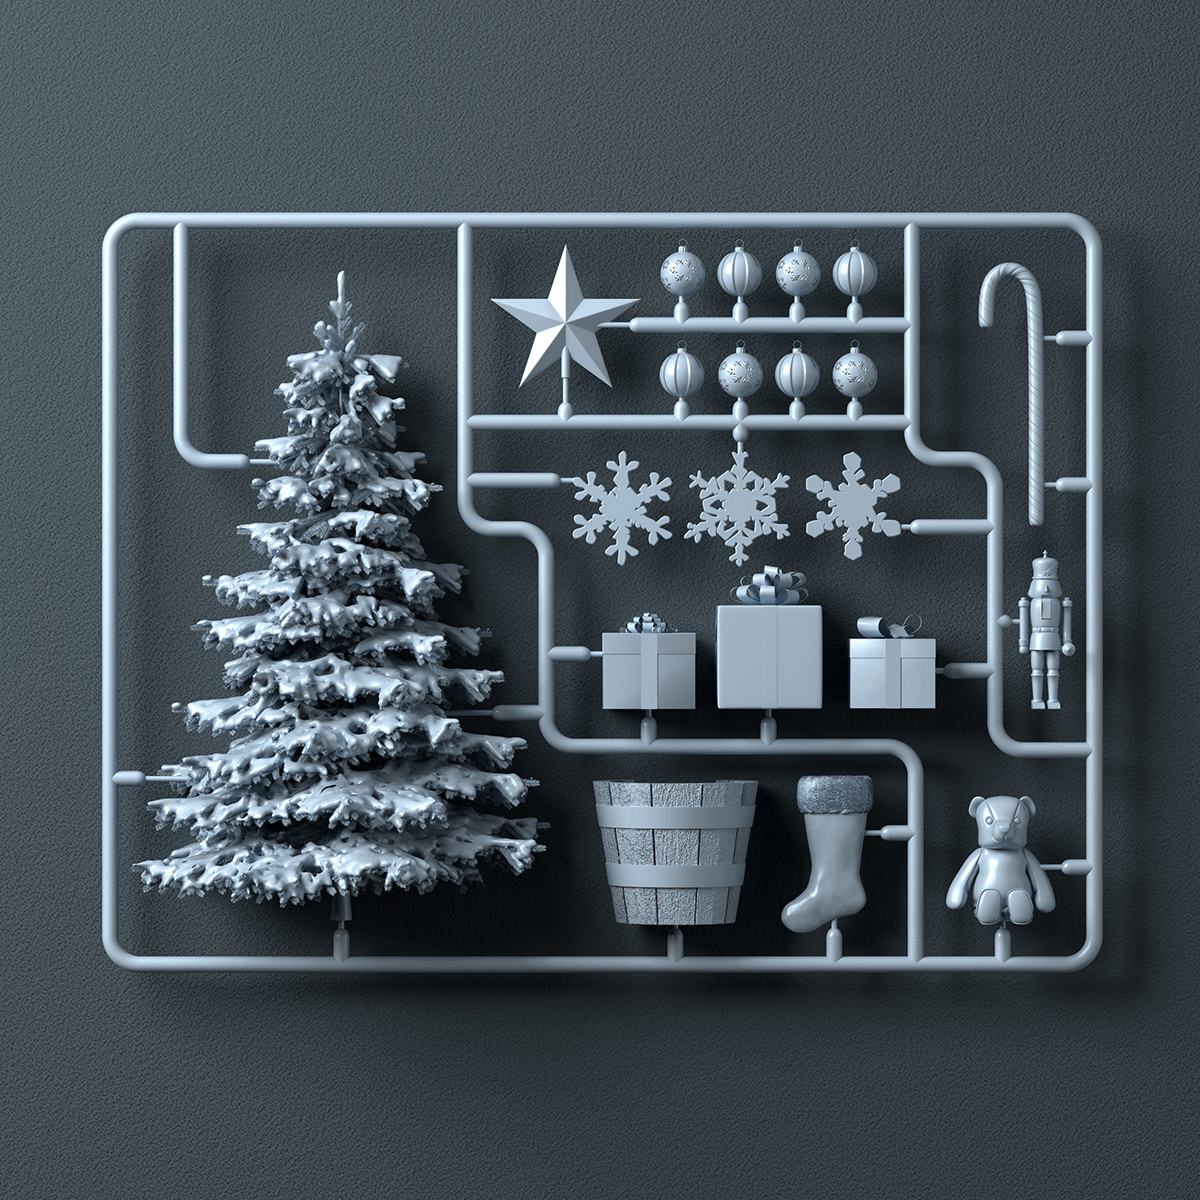 Christmas xmas model model kit airfix christmas Tree Presents solstice winter snow Maxwell Render lightwave 3d